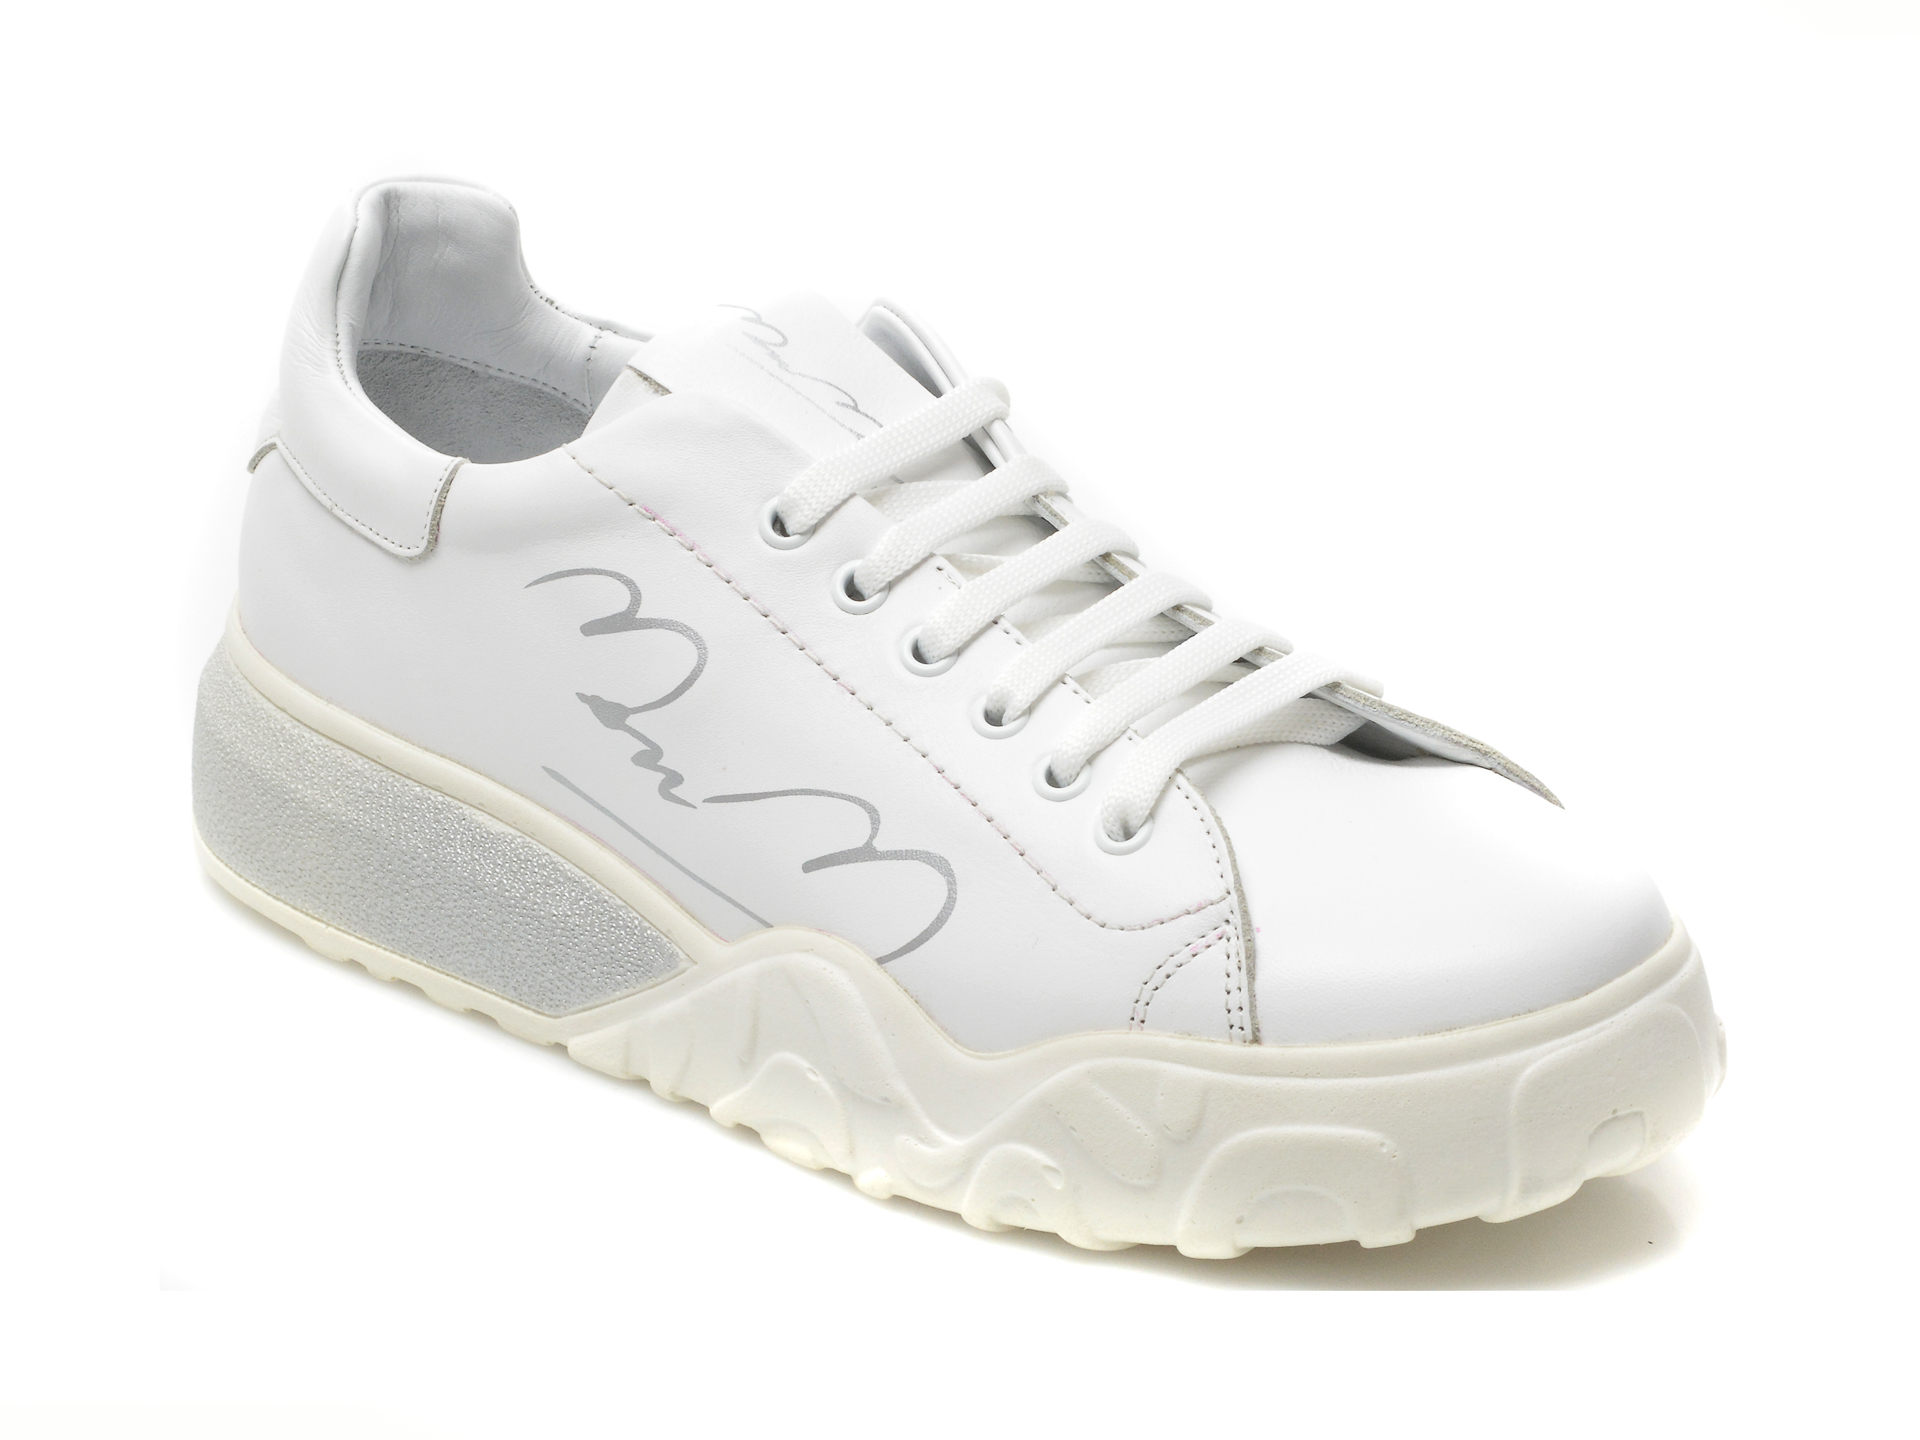 Pantofi sport MAGNOLYA albi, 141, din piele naturala MAGNOLYA